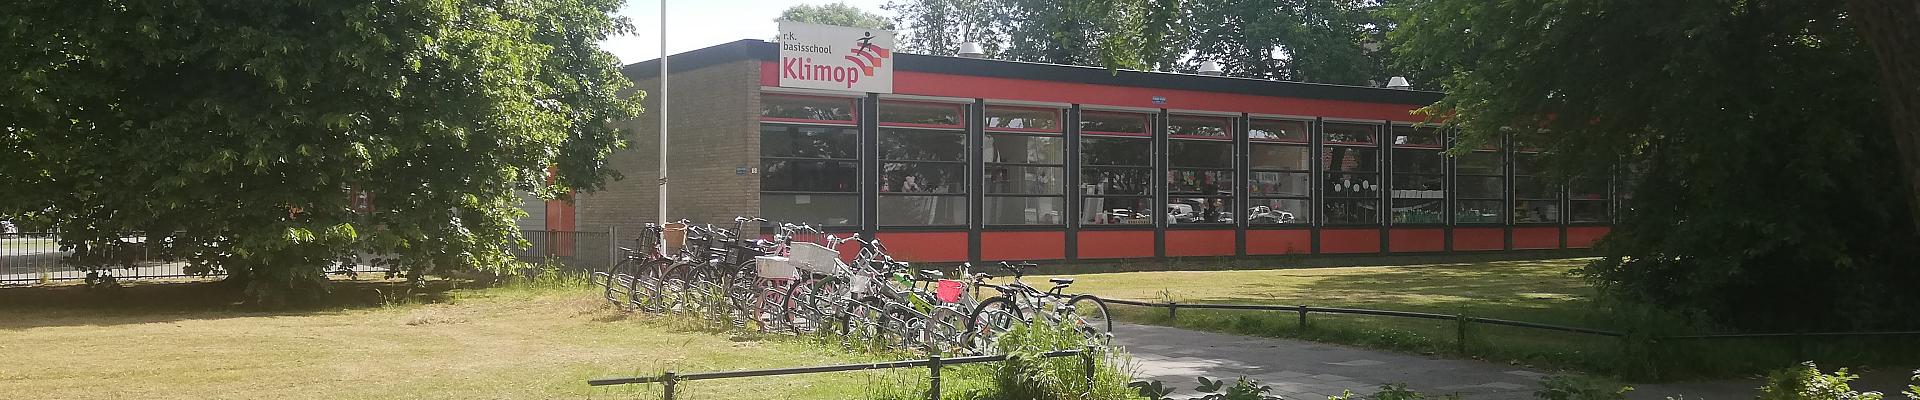 Basisschool Klimop